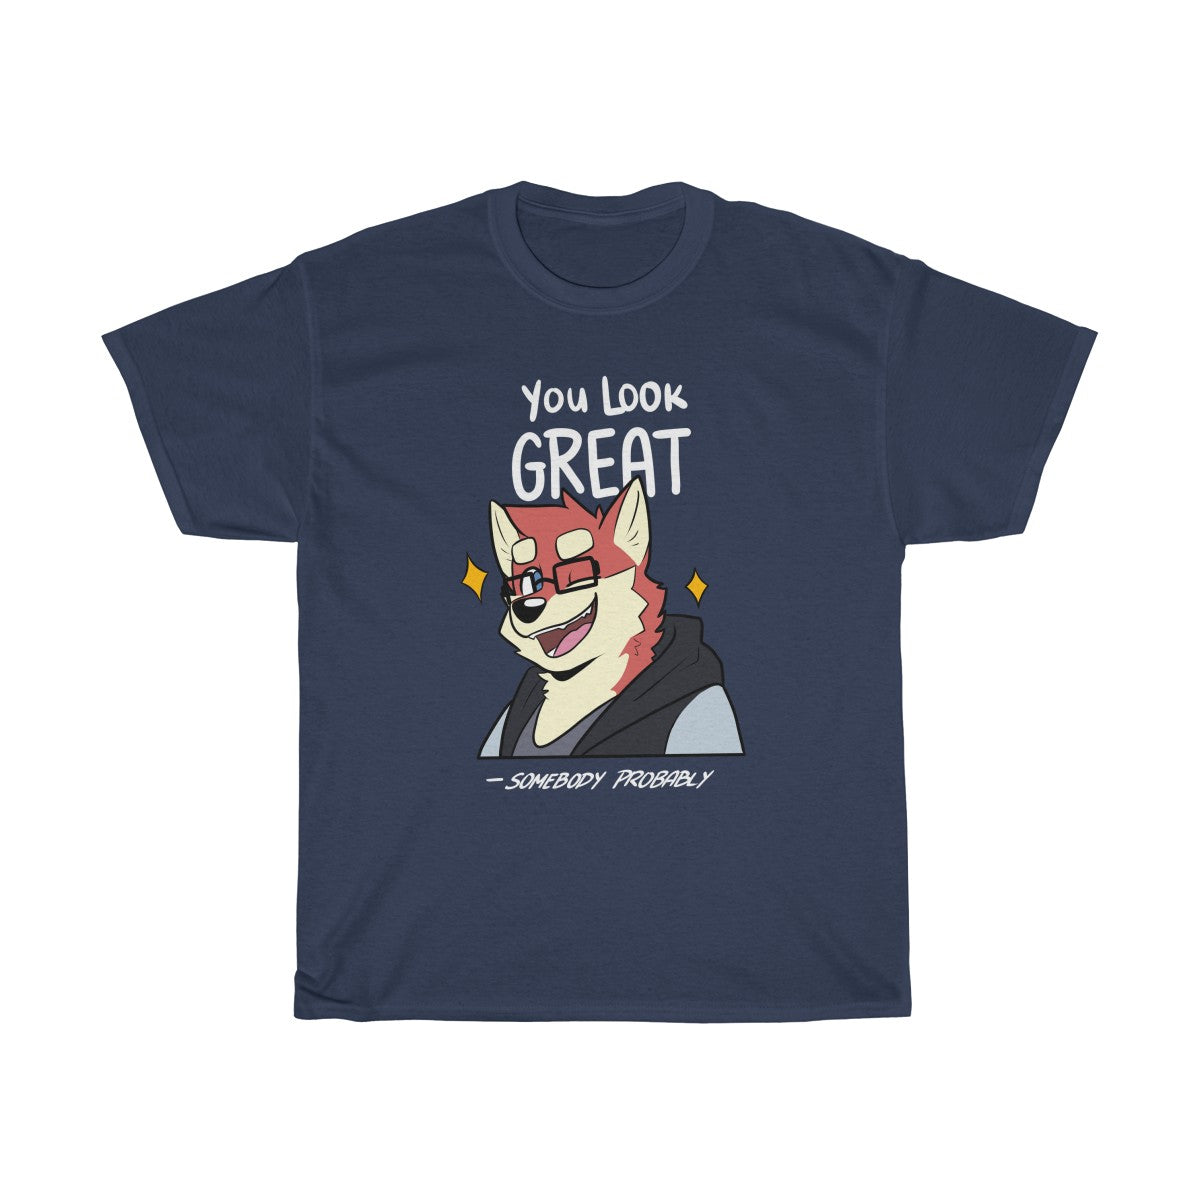 You Look Great - T-Shirt T-Shirt Ooka Navy Blue S 